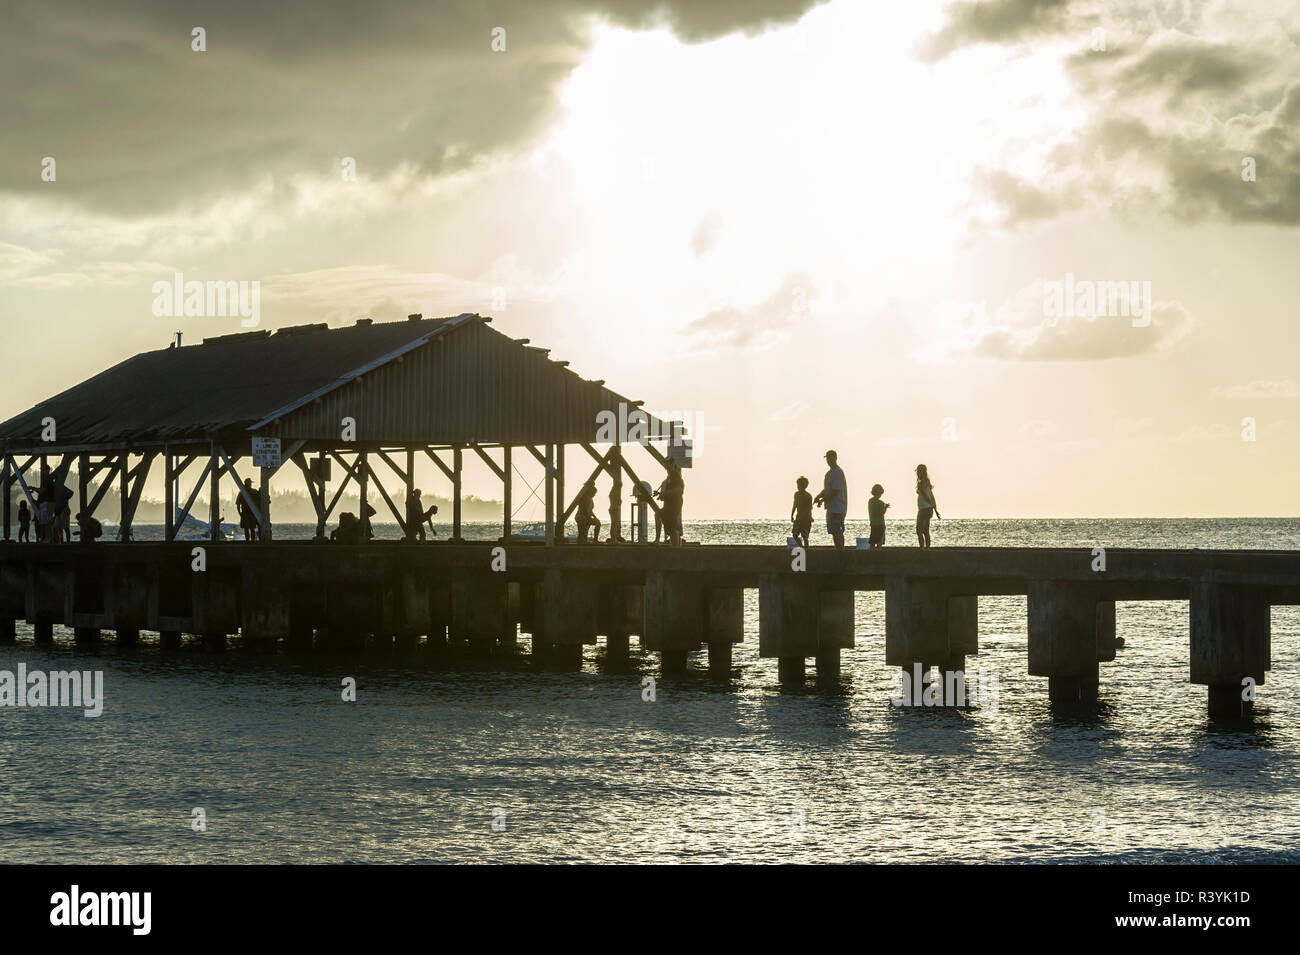 Hanalei Bay, Hanalei Pier, Hawaii, Kauai, tramonto Foto Stock